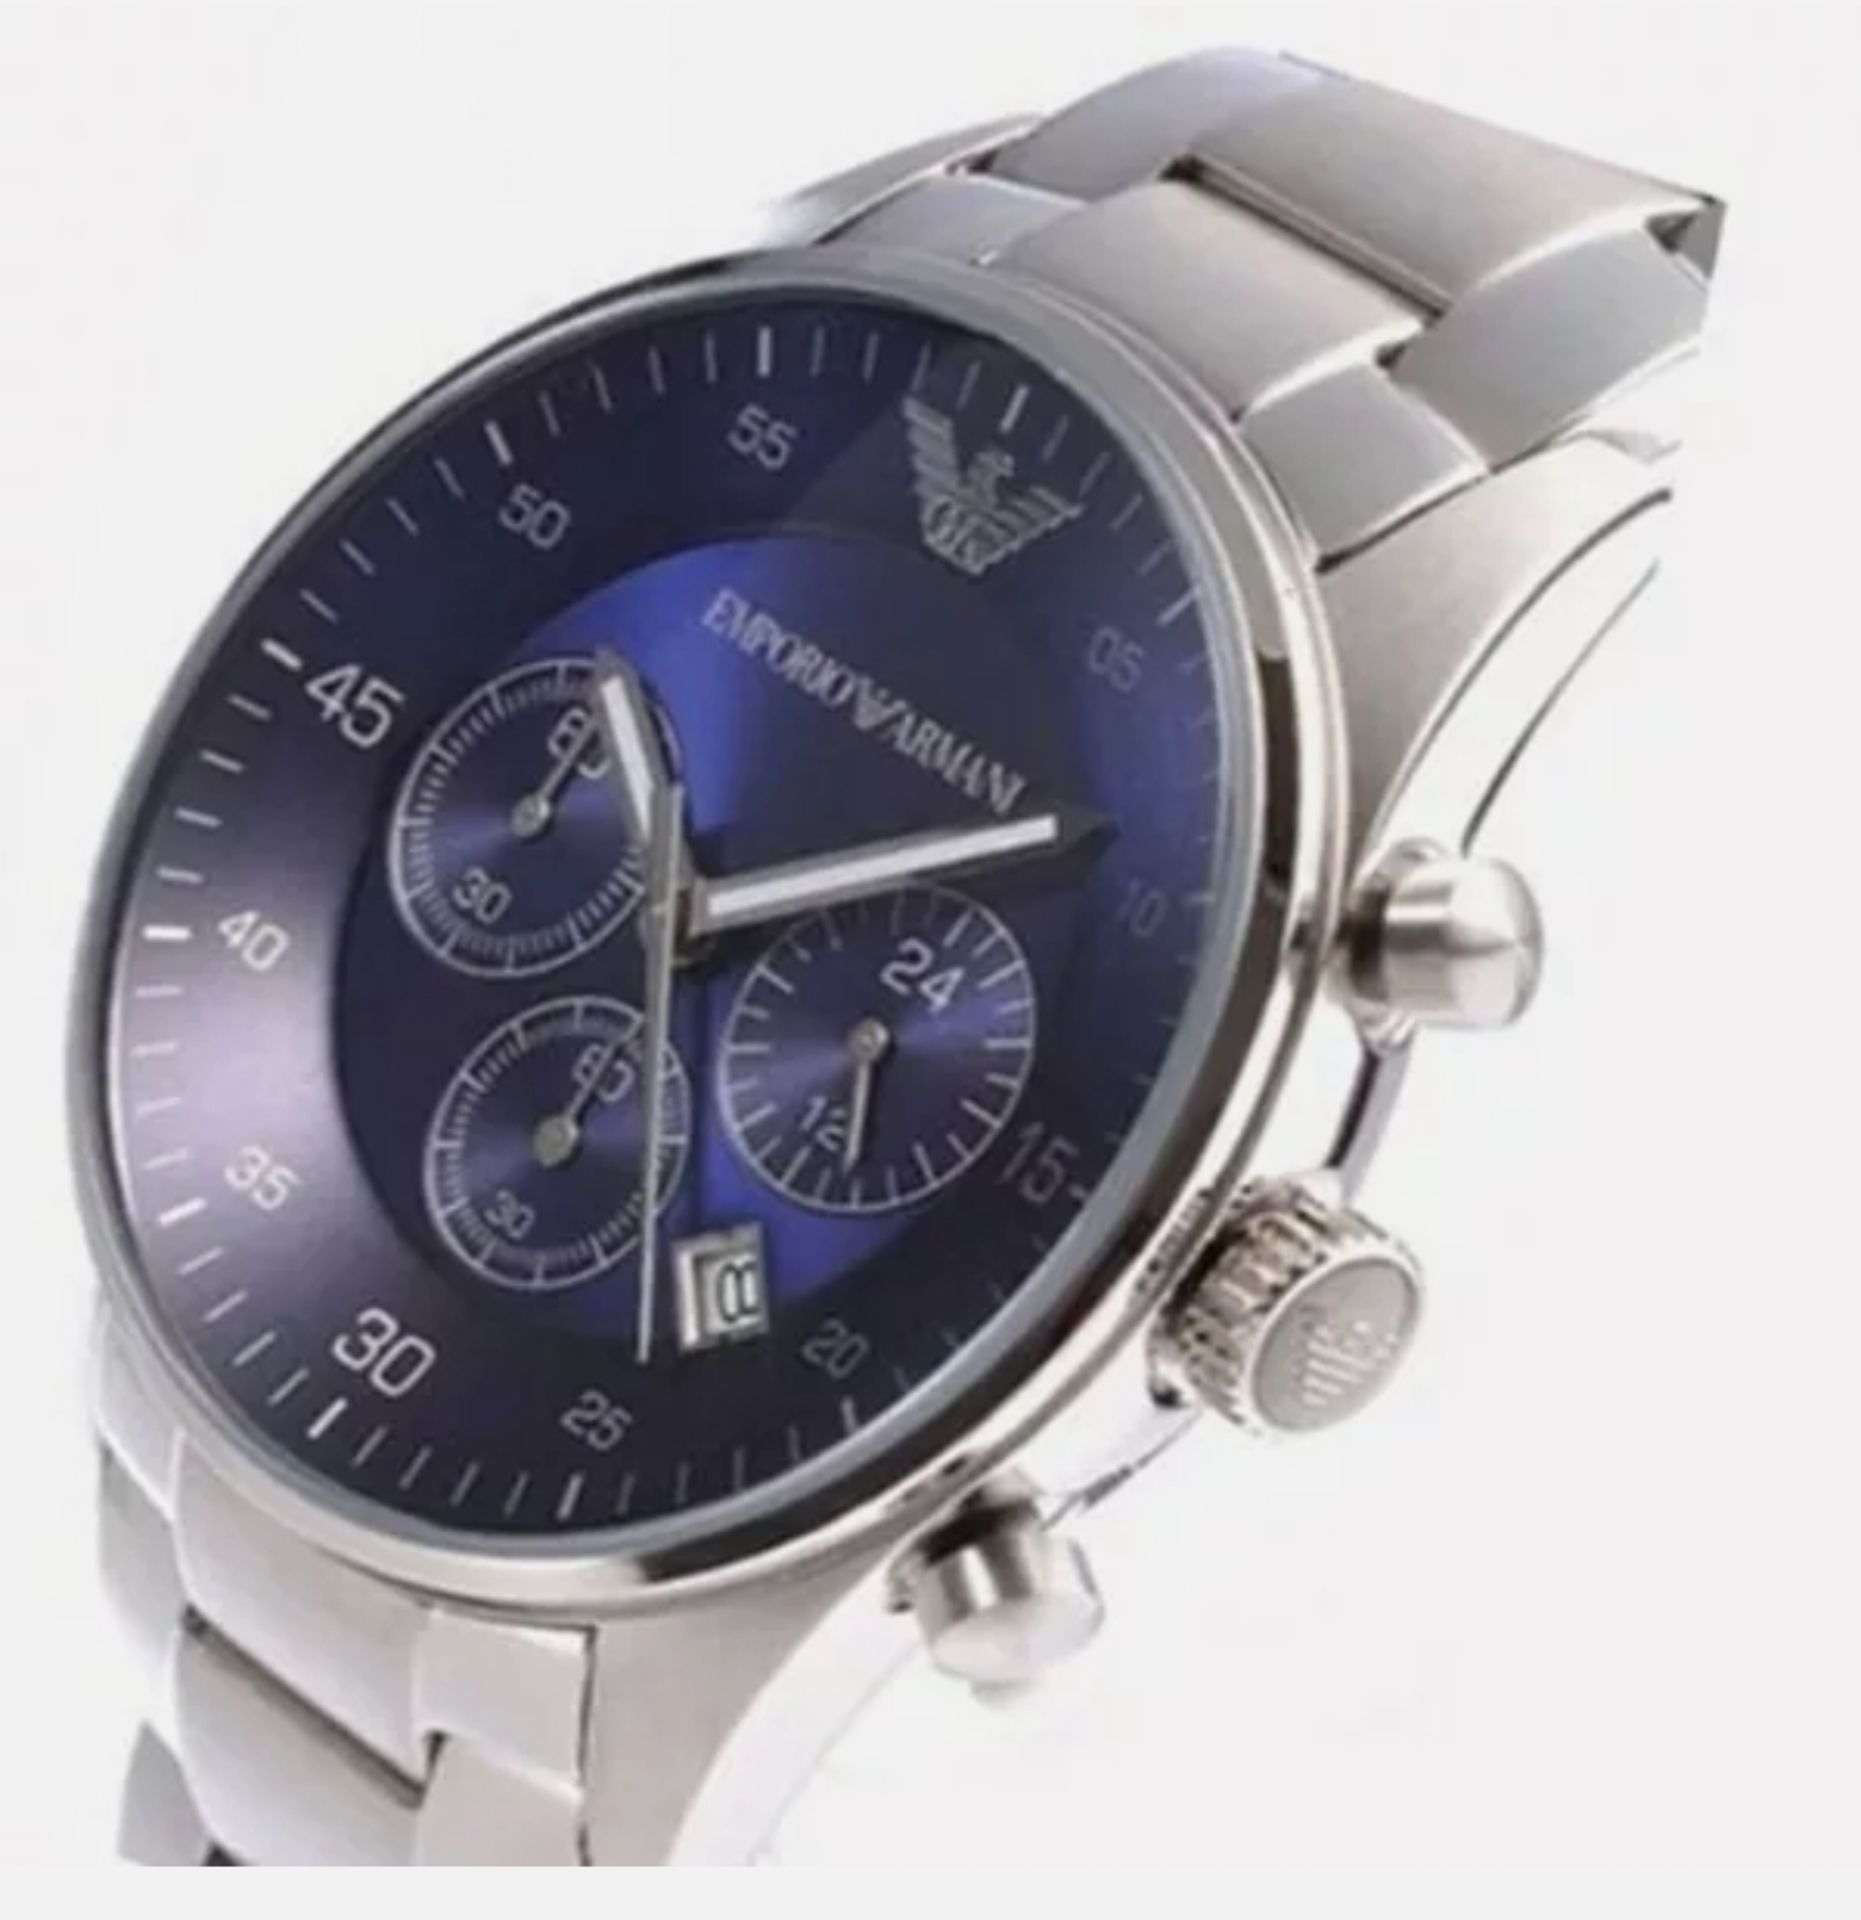 Emporio Armani AR5860 Quartz Men's Stainless Steel Chronograph Watch - Image 7 of 8